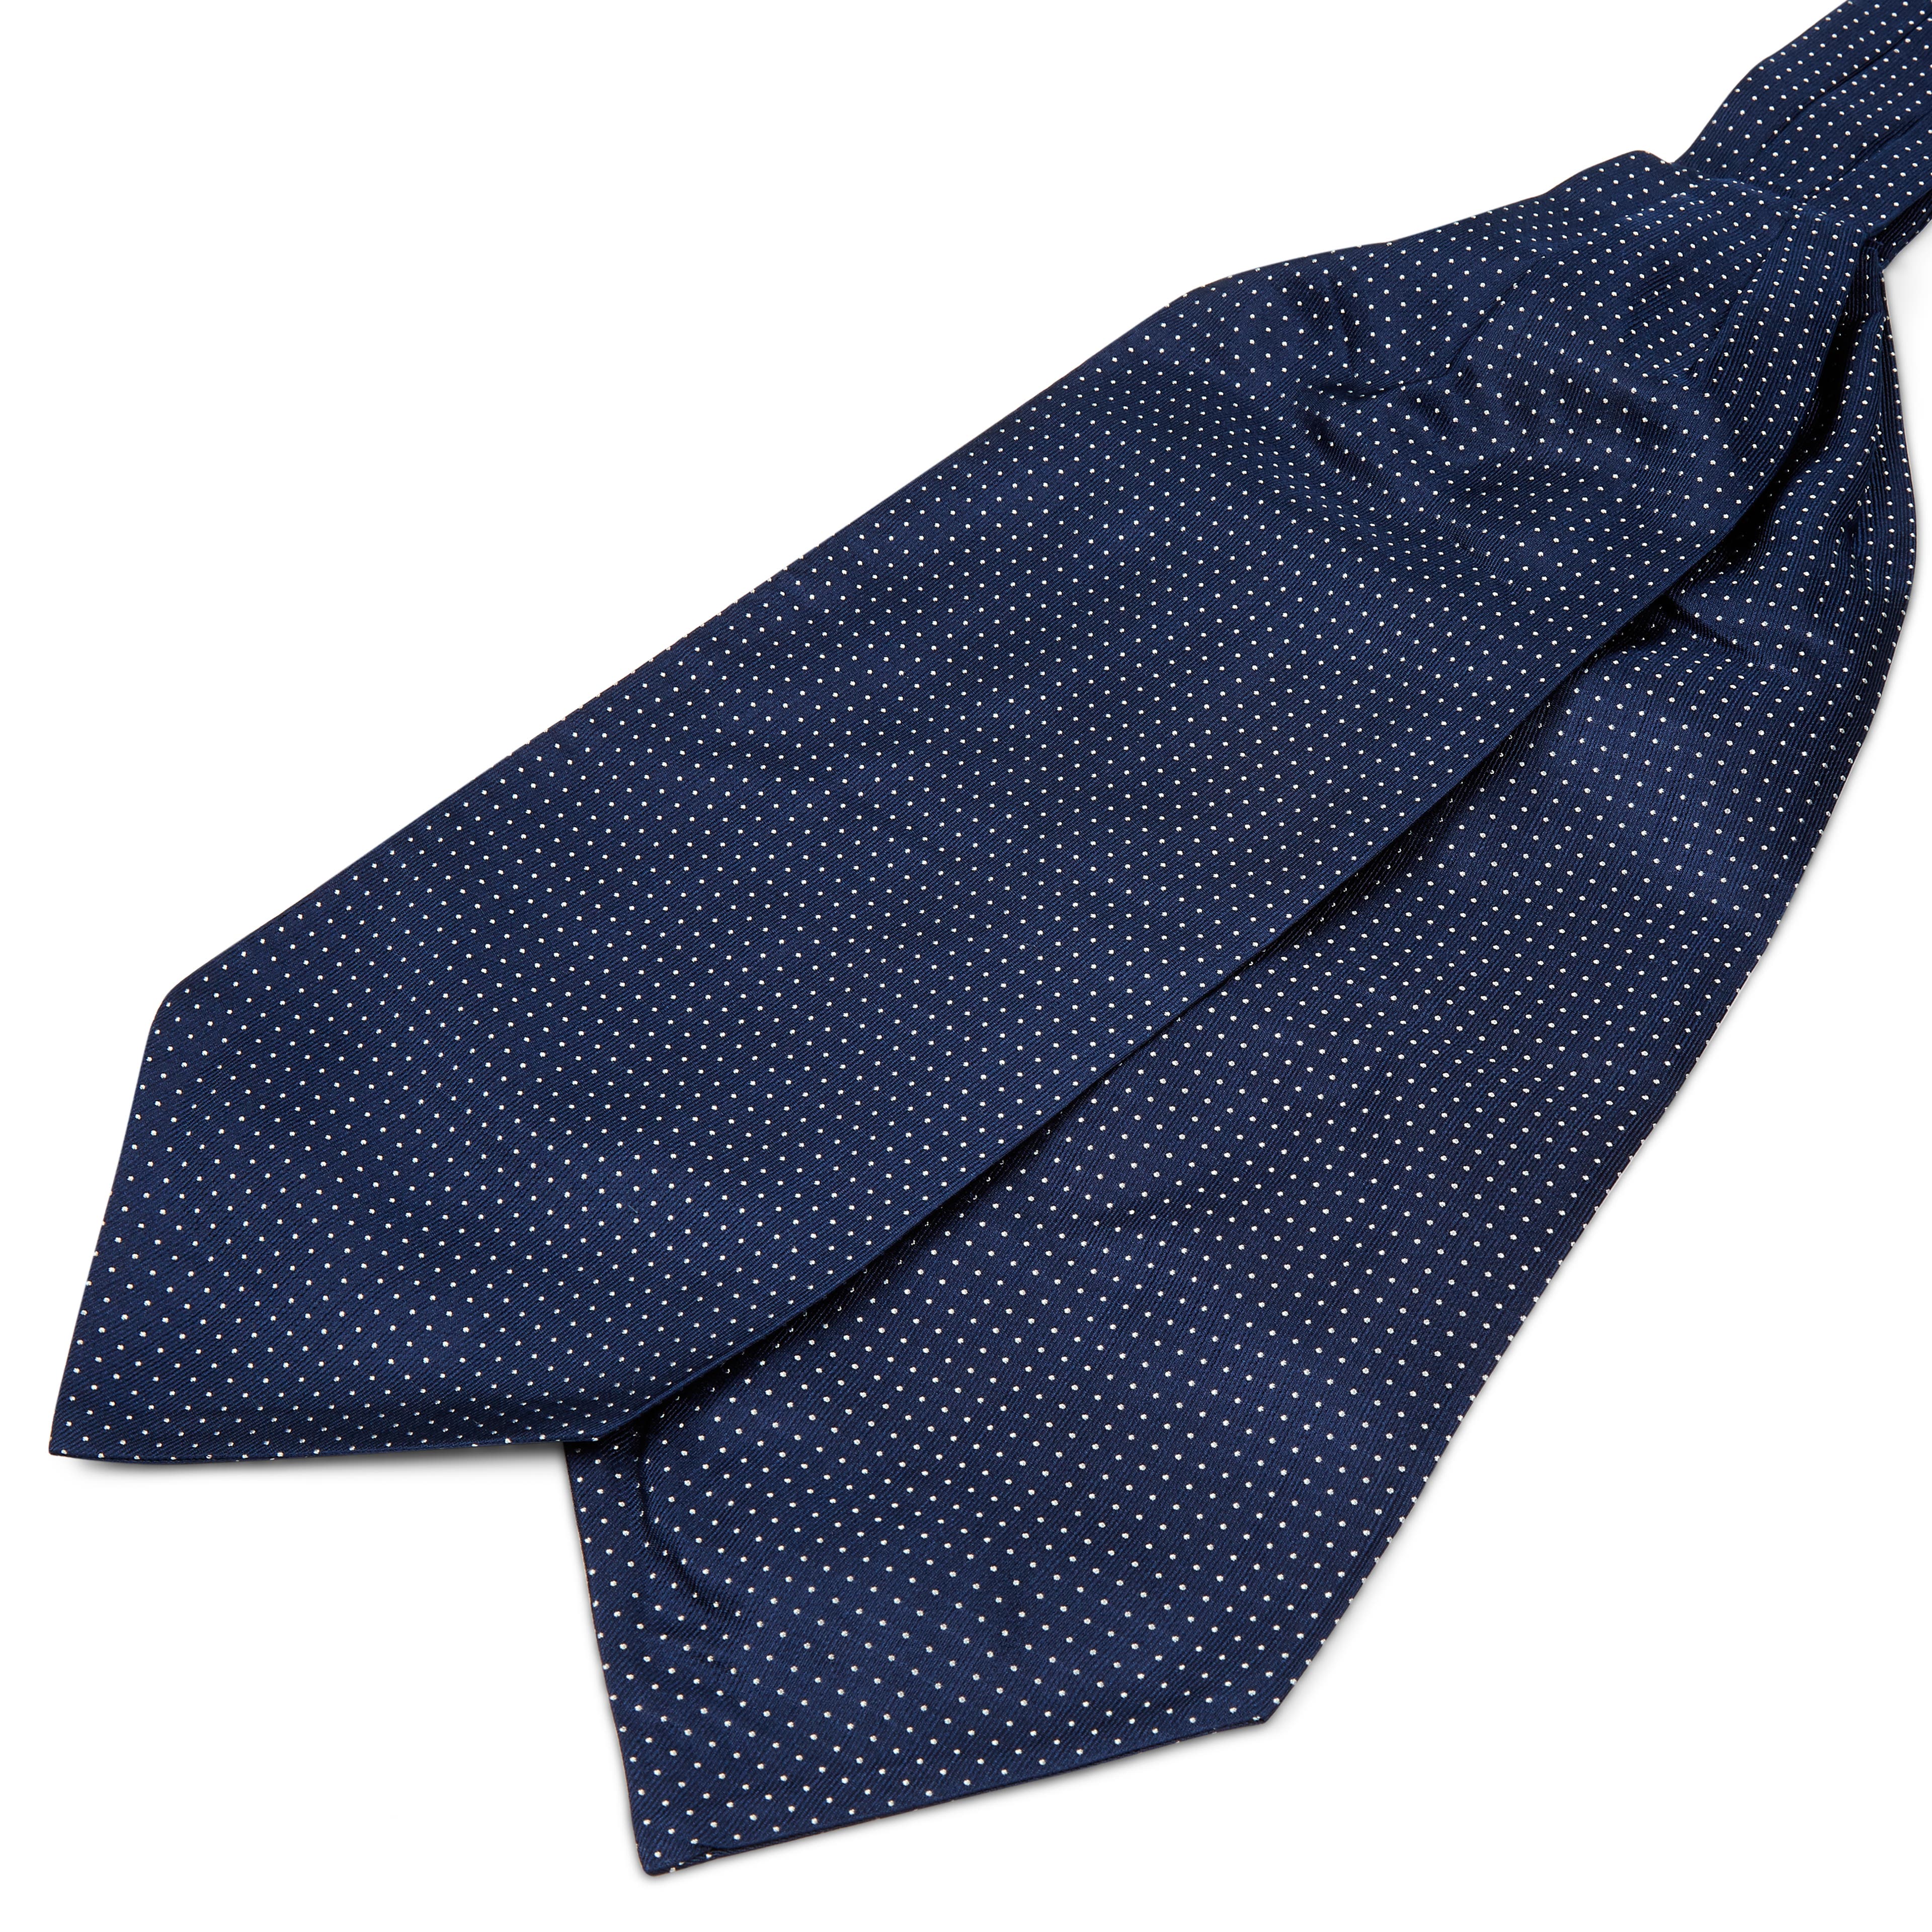 Cravatta ascot in seta blu navy con fantasia a pois